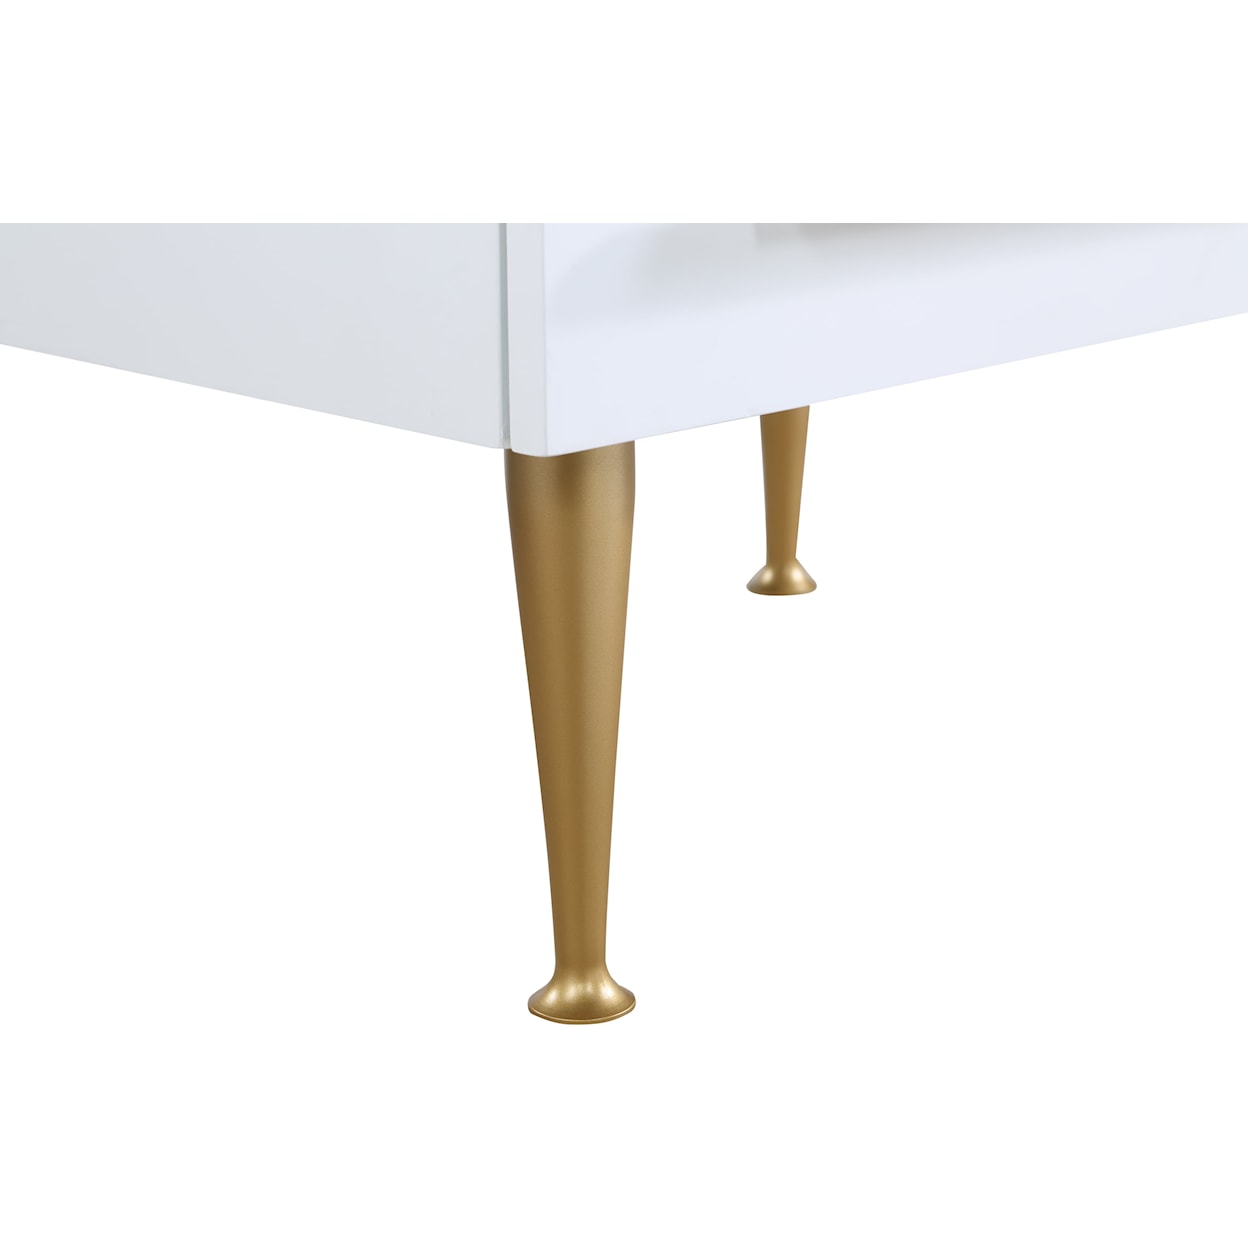 Meridian Furniture Marisol 3-Drawer Nightstand